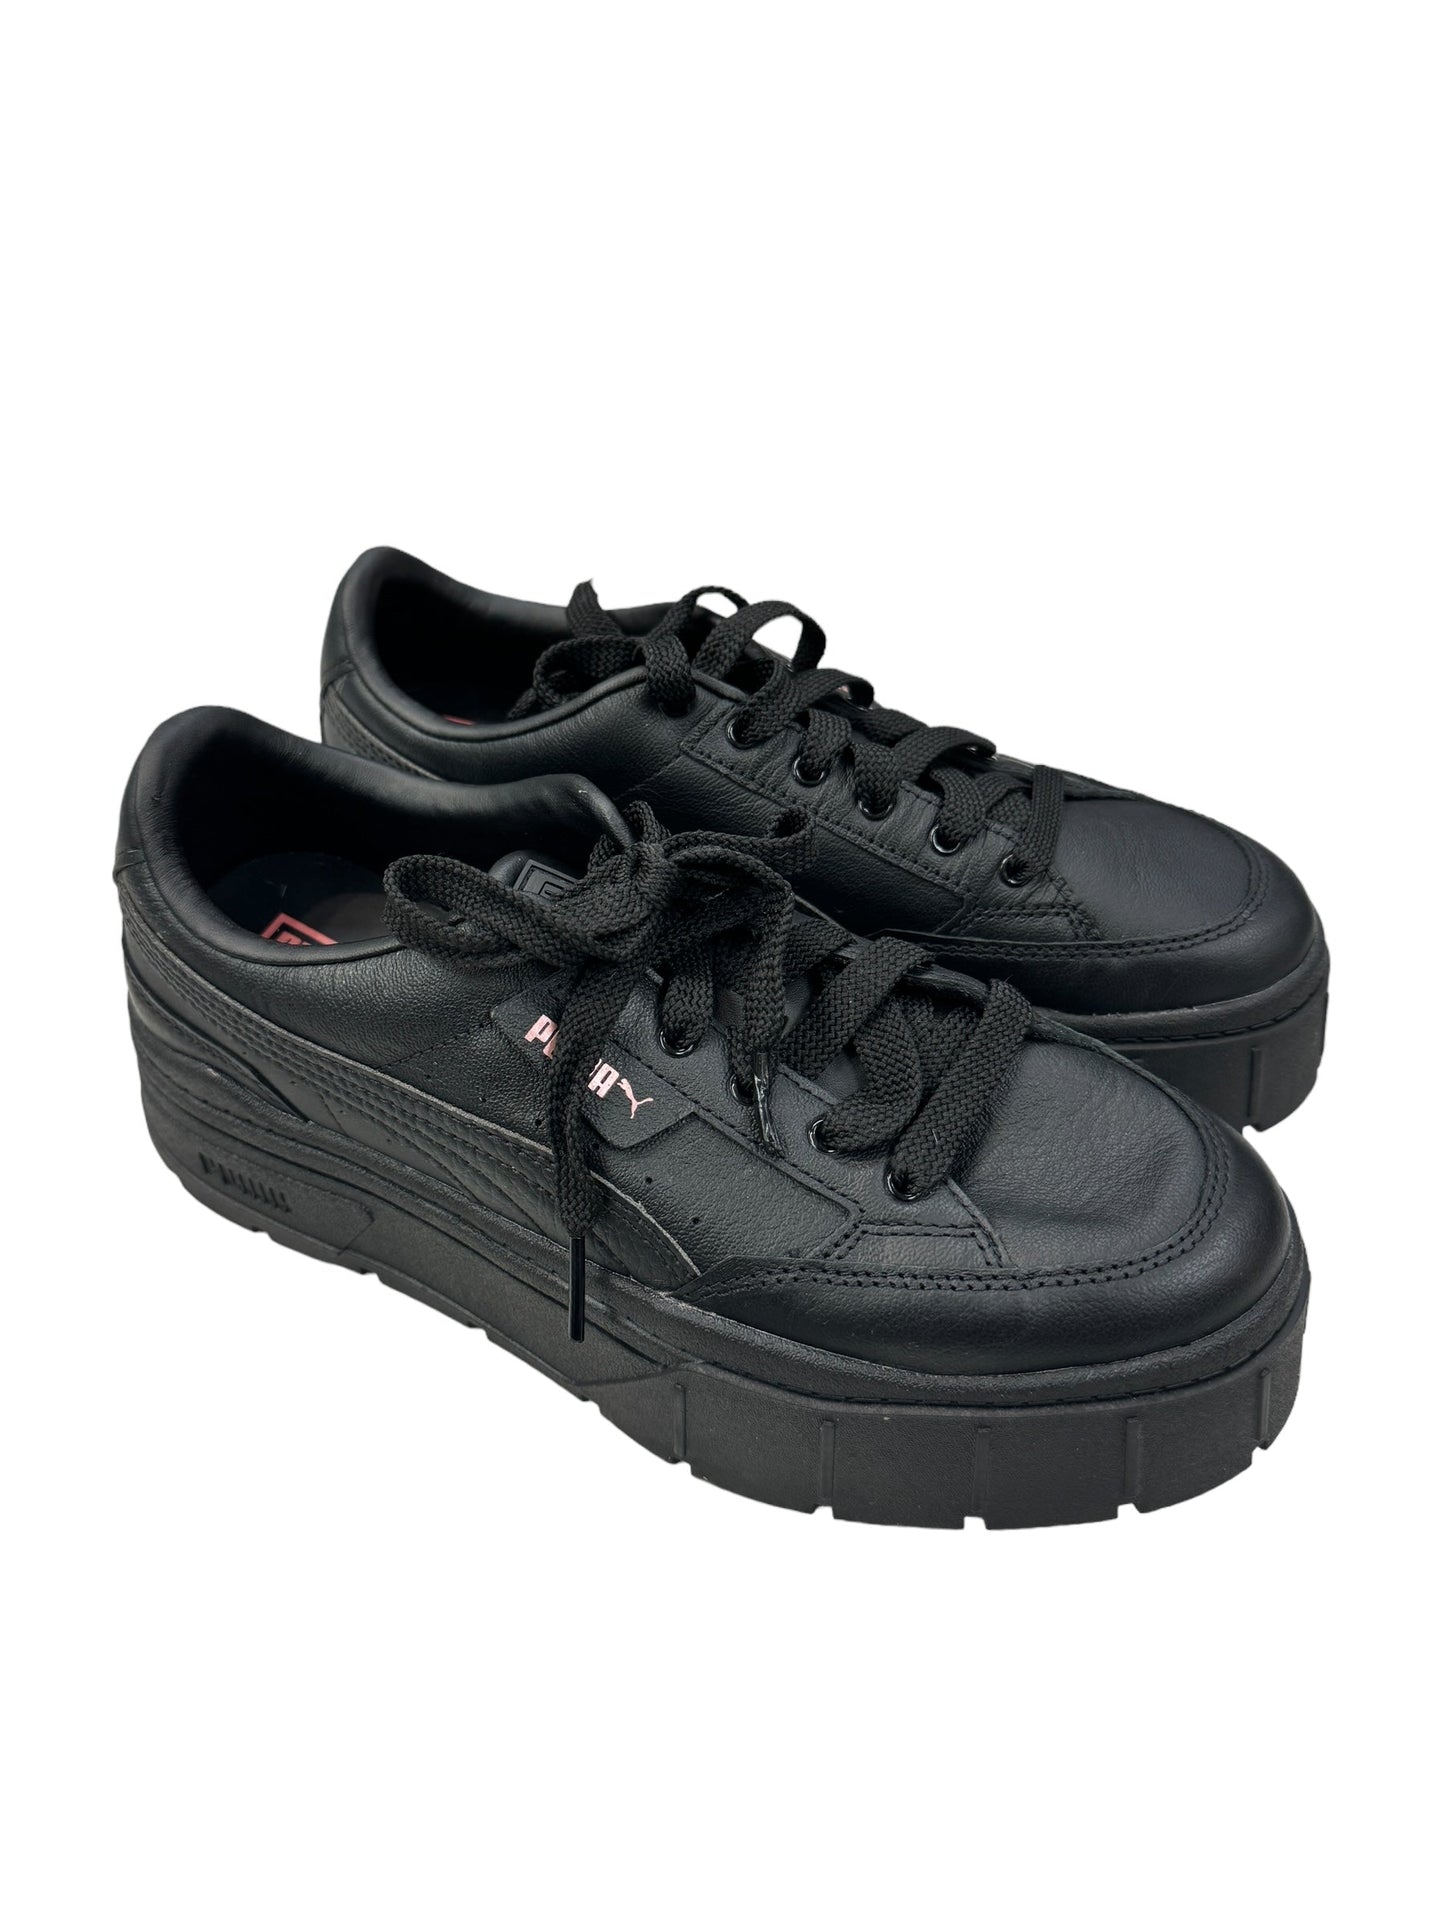 Black Shoes Athletic Puma, Size 9.5